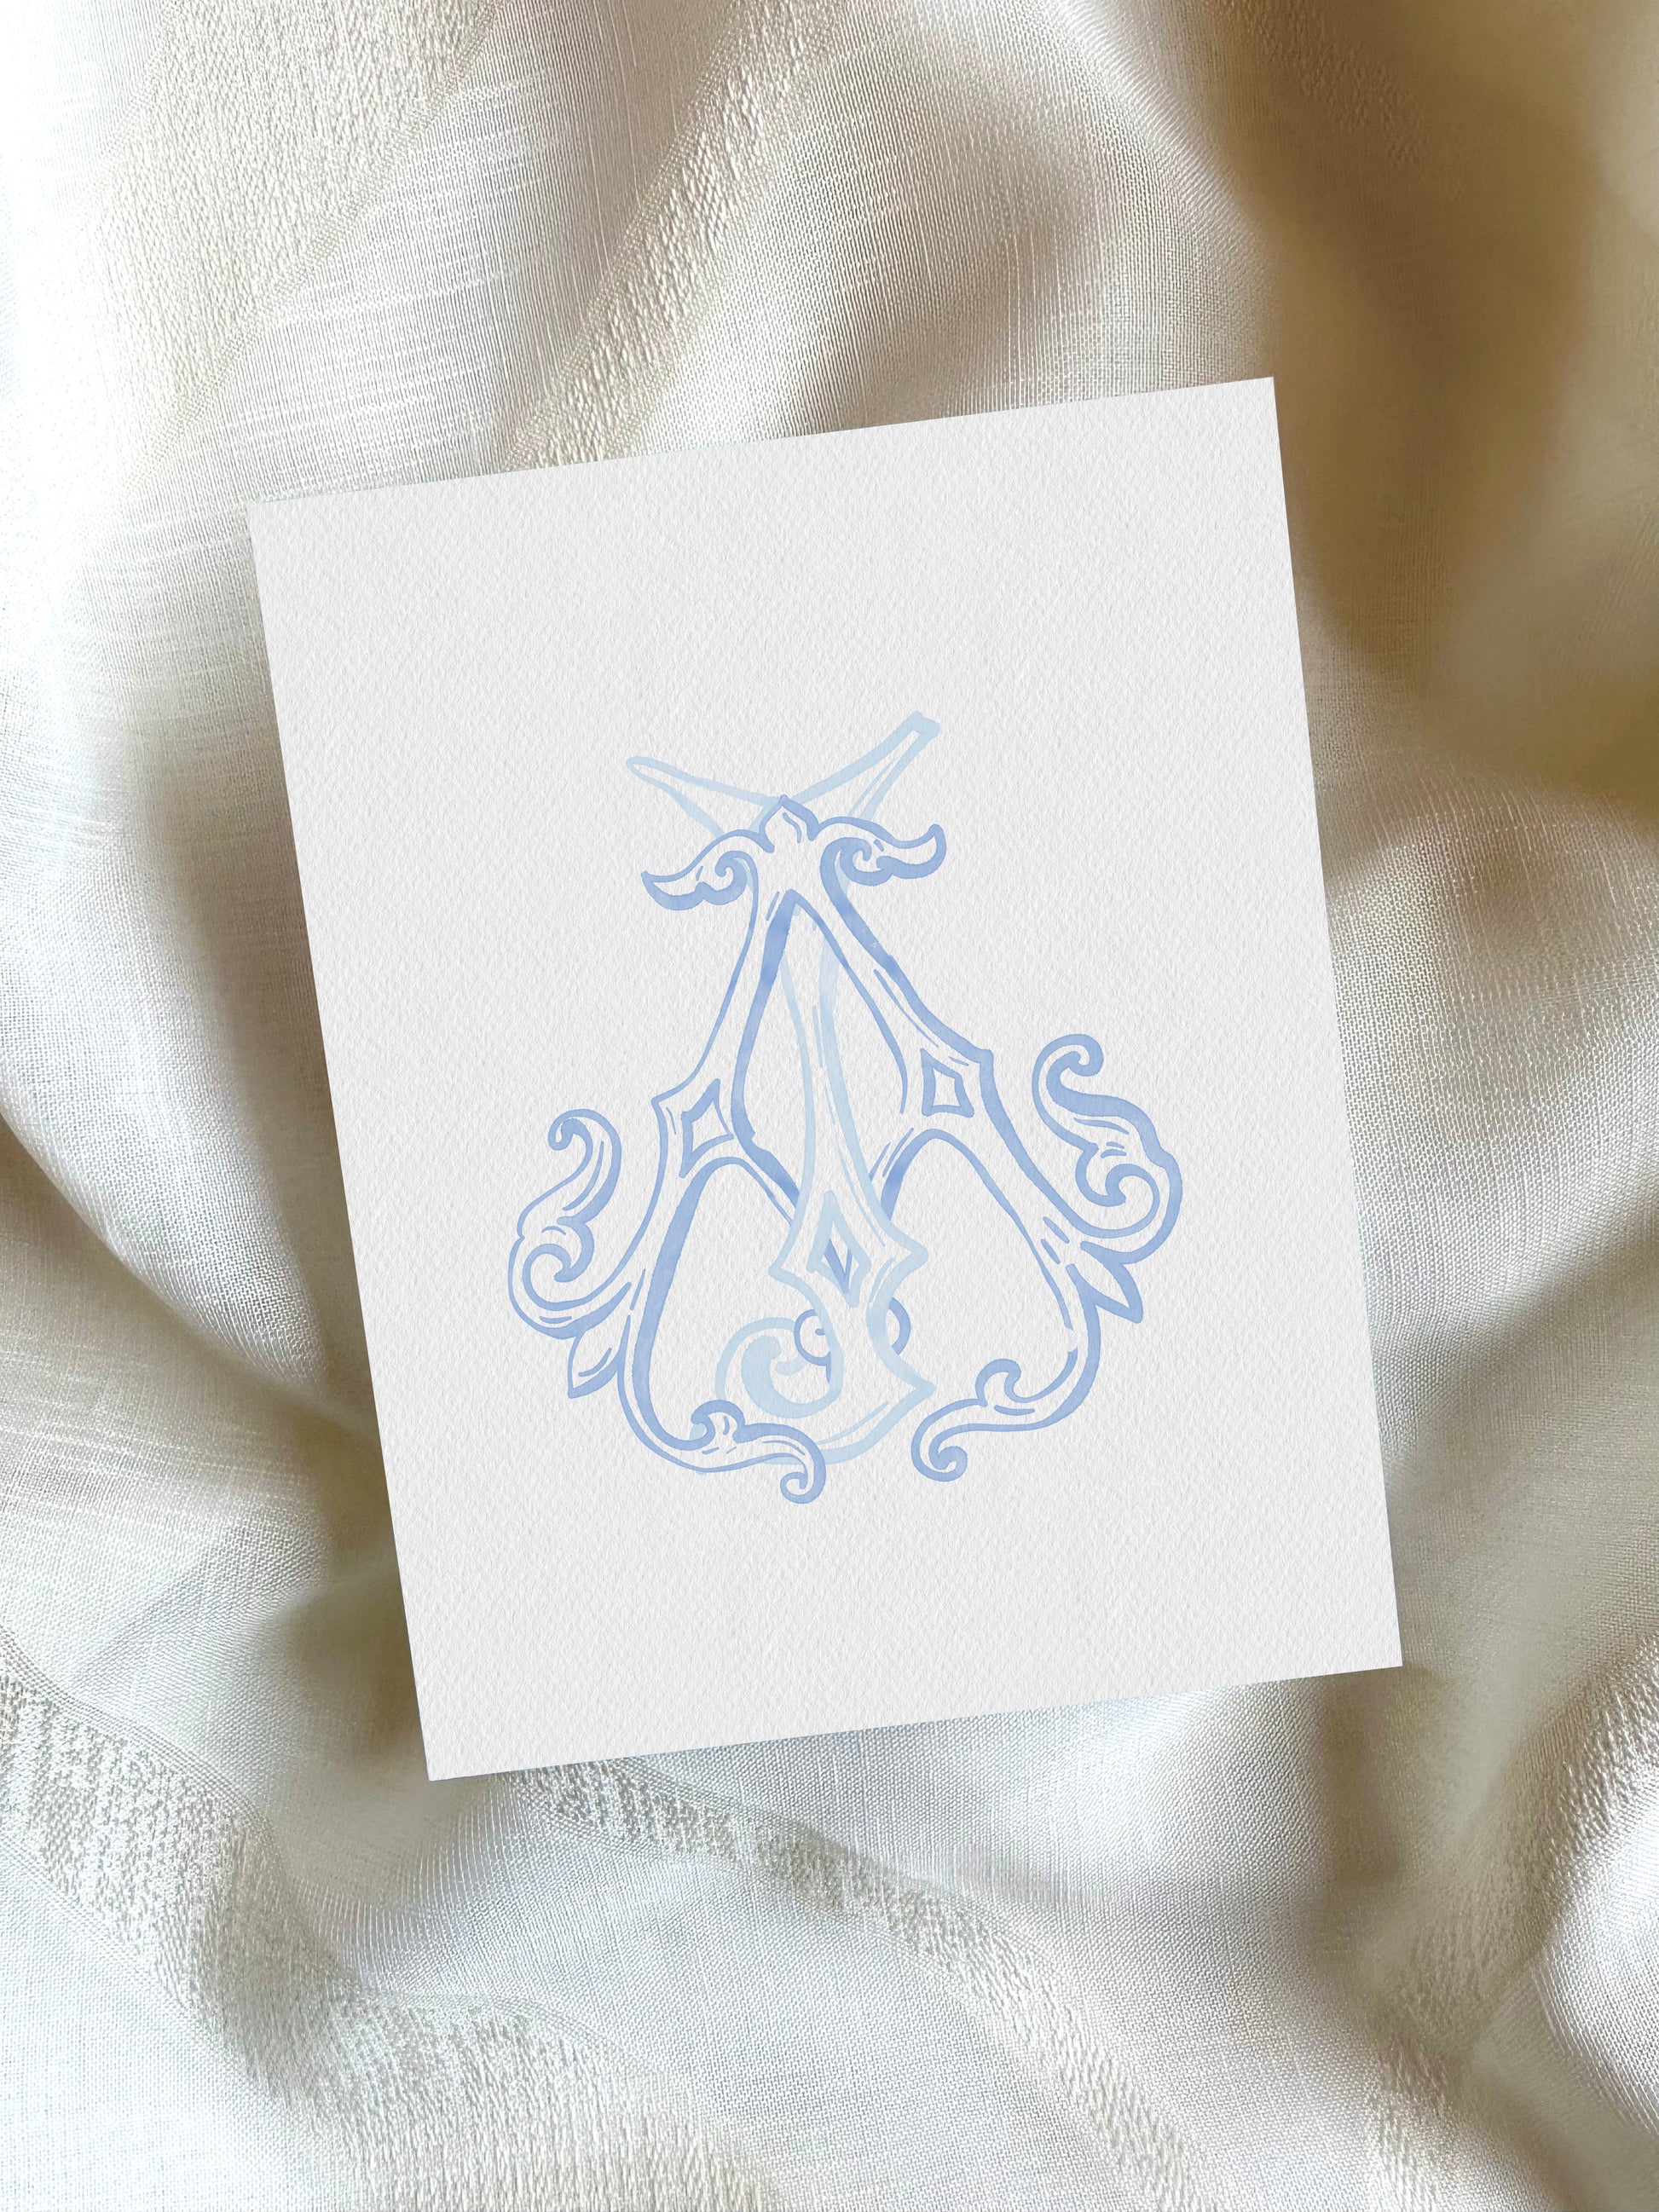 2 Letter Monogram with Letters AJ JA | Digital Download - Wedding Monogram SVG, Personal Logo, Wedding Logo for Wedding Invitations The Wedding Crest Lab